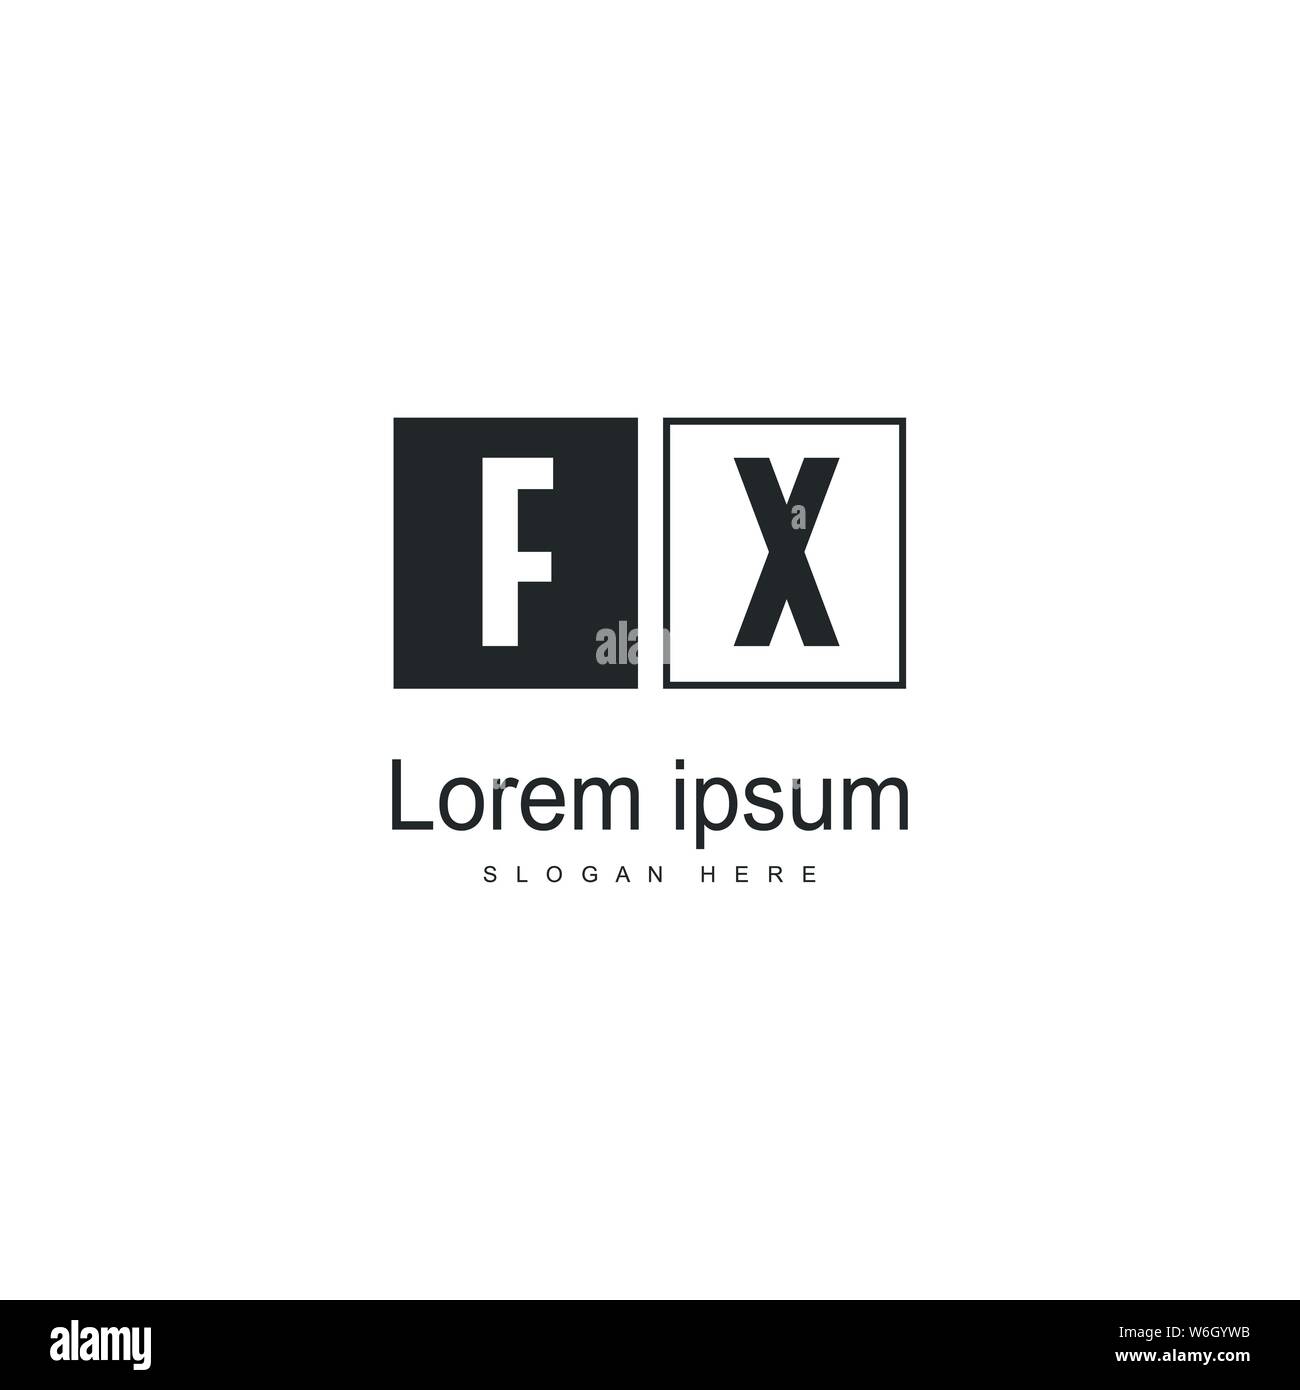 Fx modern leter logo design with black and white Vector Image